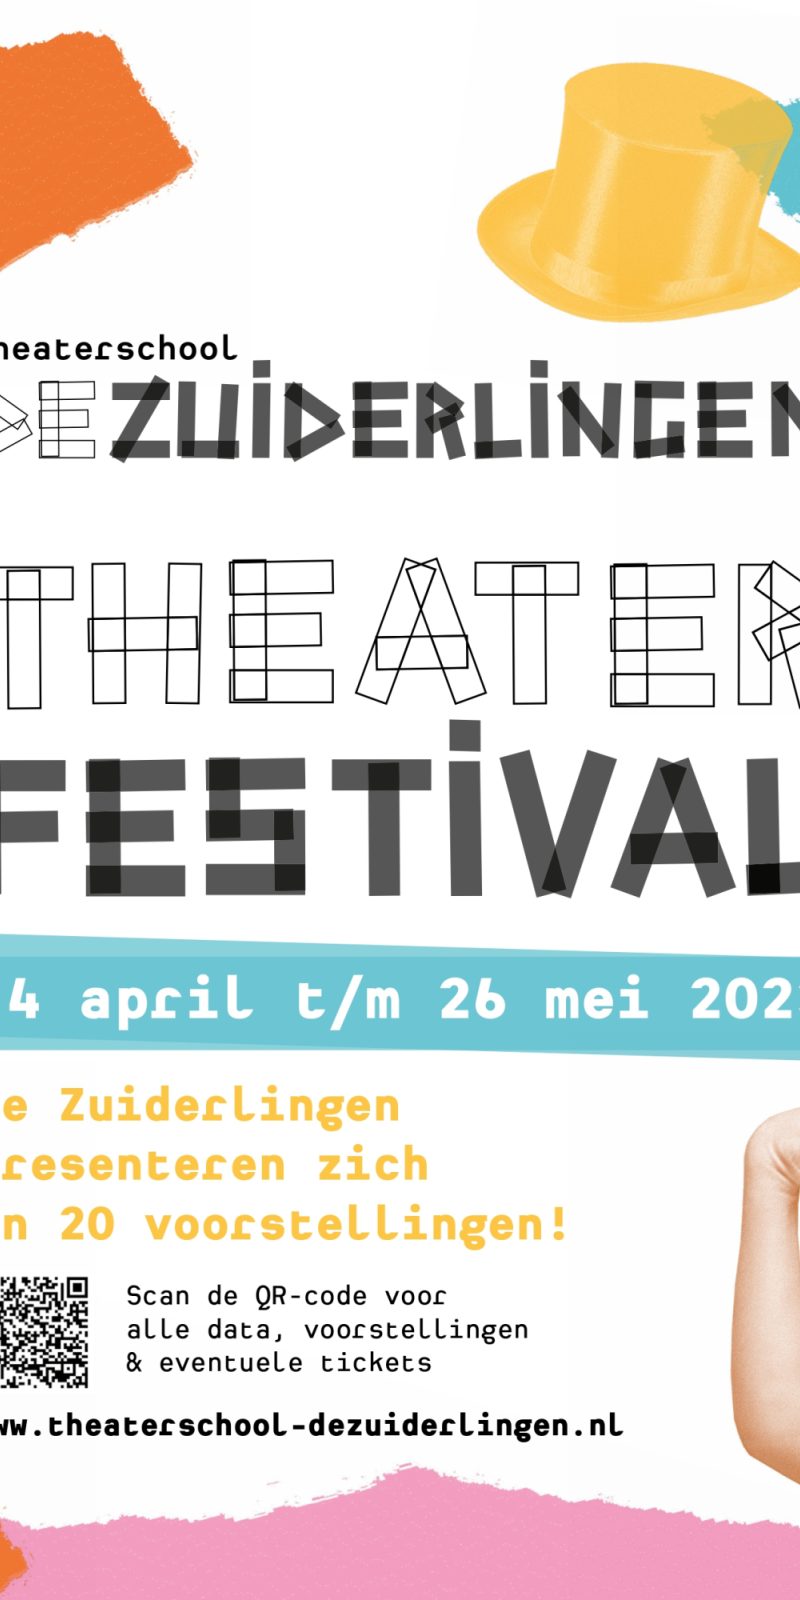 Theaterschool de Zuiderlingen theater festival A3 poster pages to jpg 0001